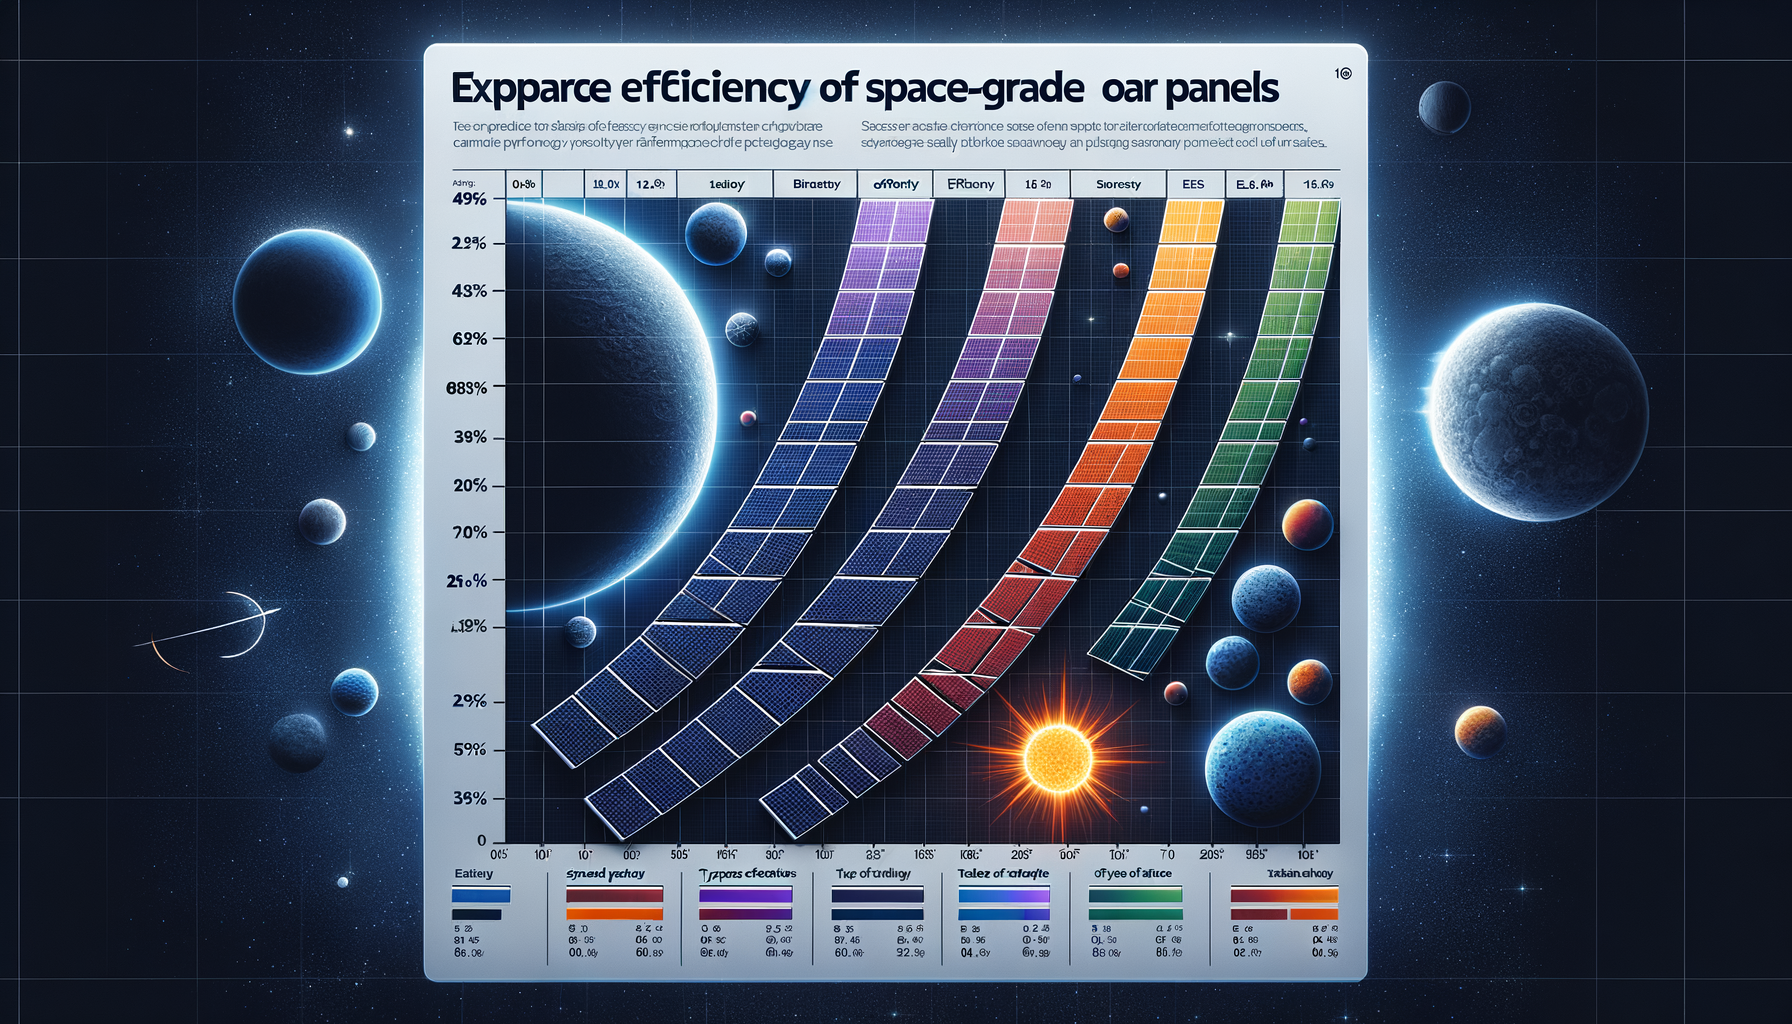 ALT: Efficiency comparison chart for various types of solar panels